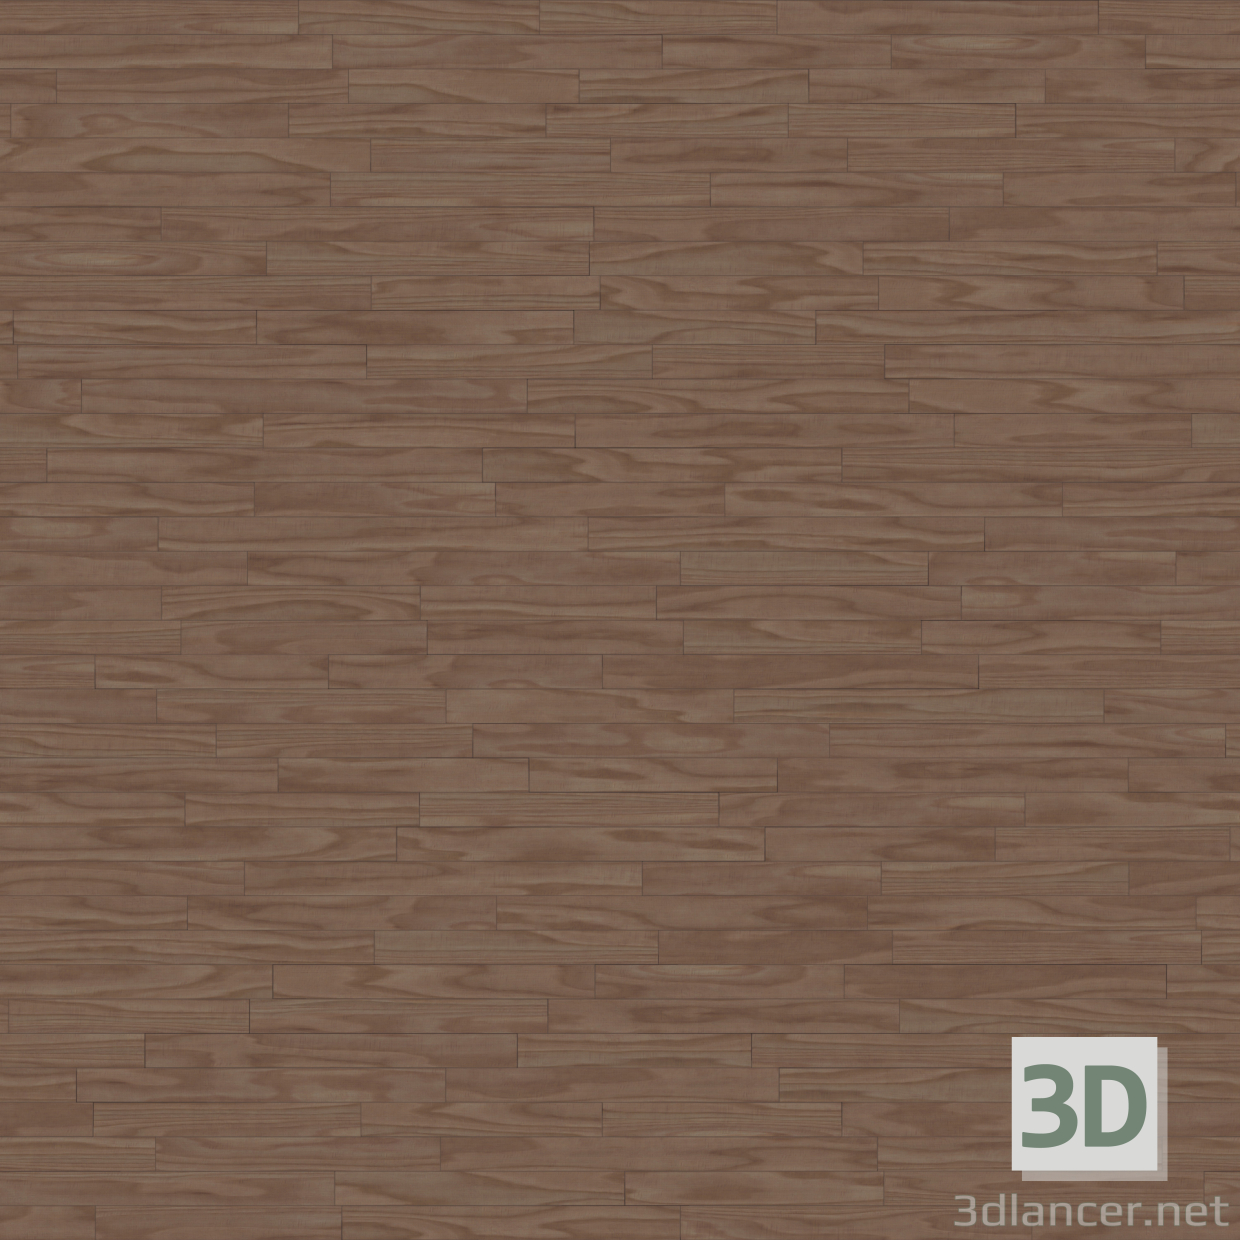 Texture parquet 35 free download - image